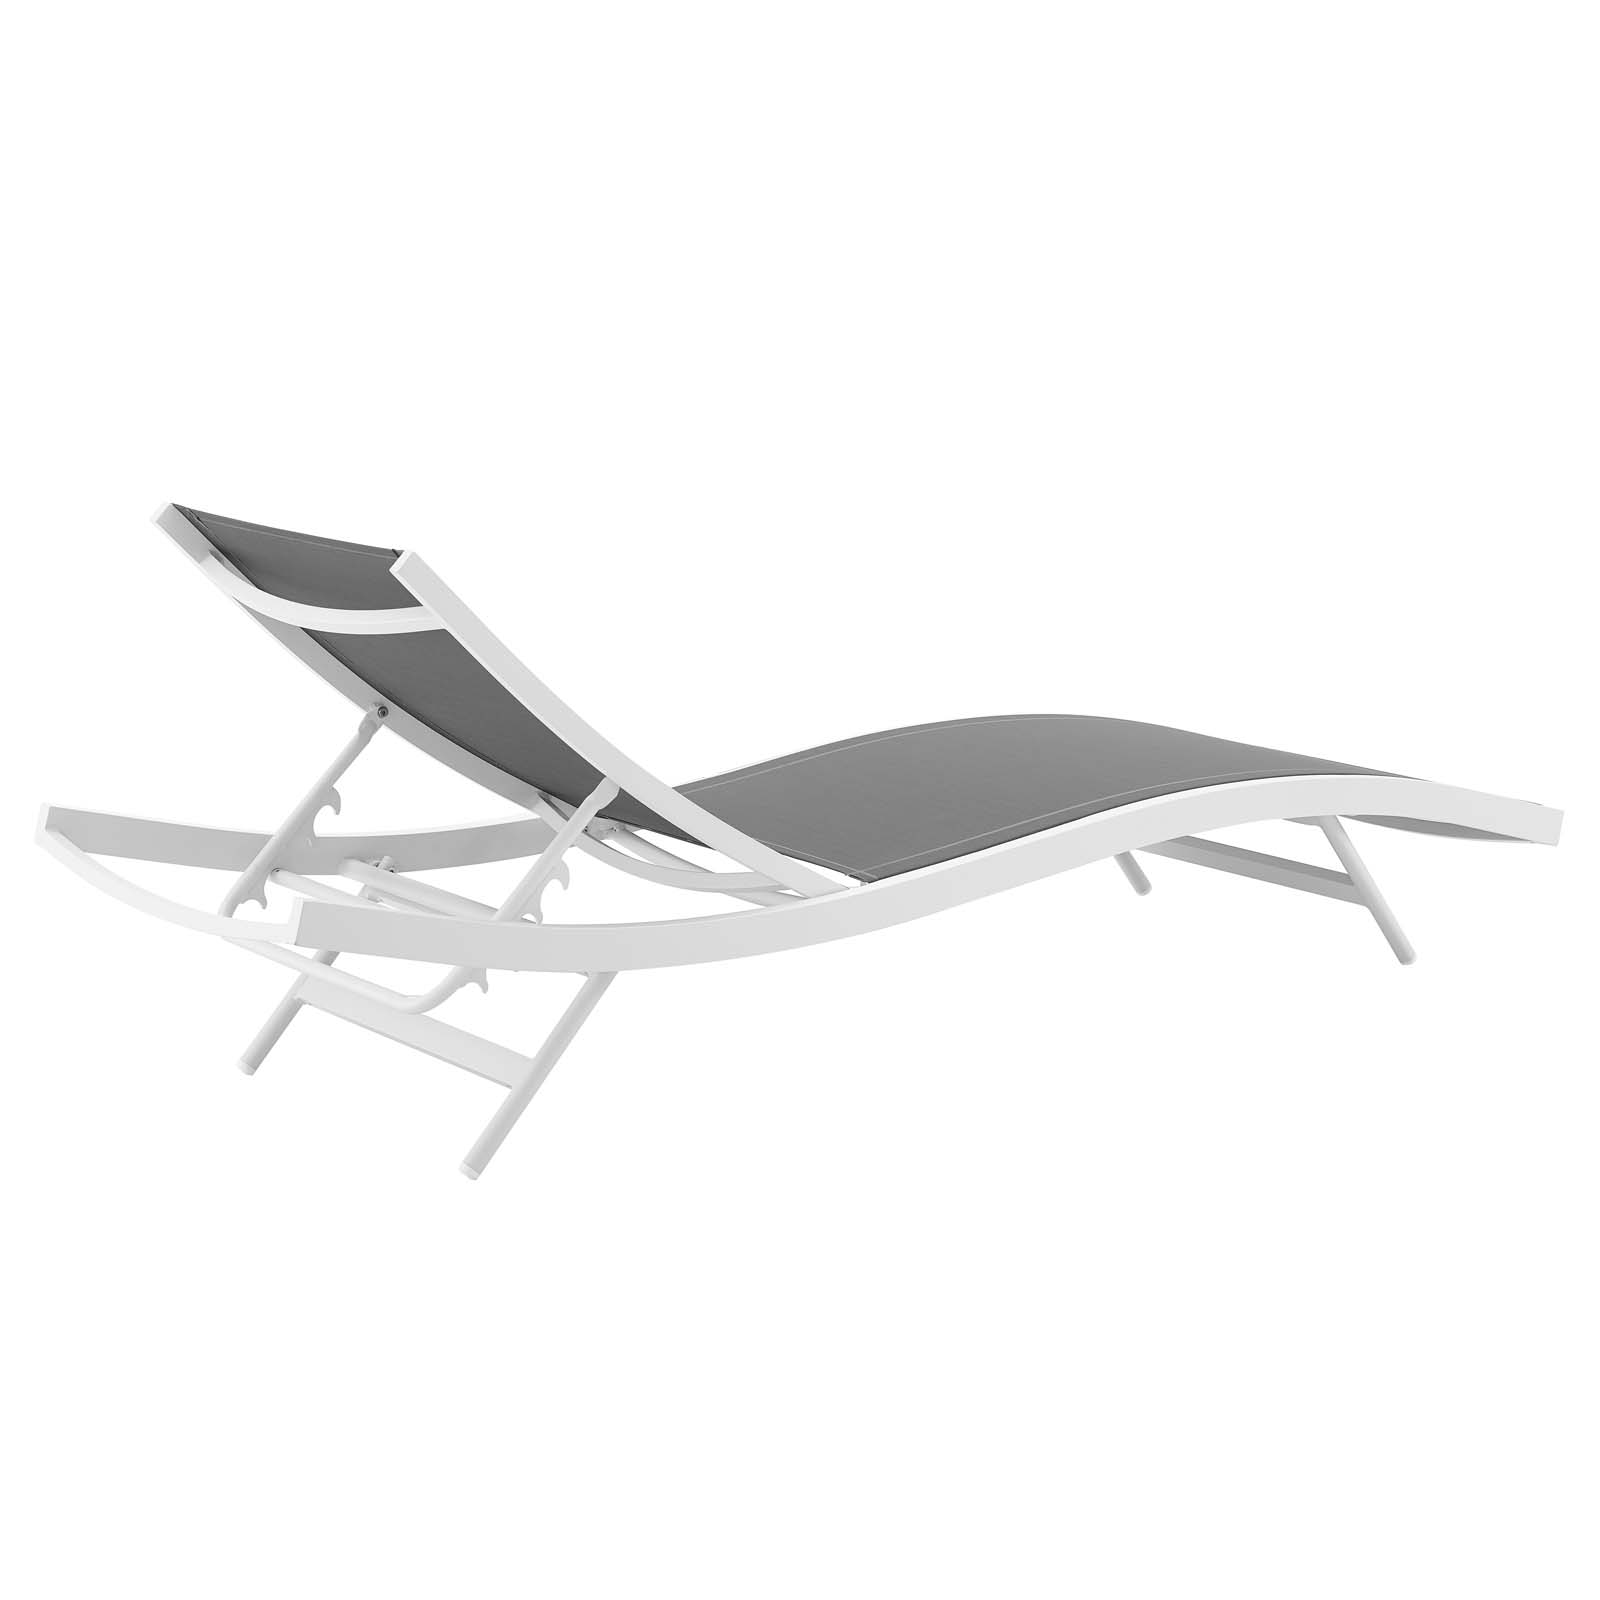 Modern Contemporary Urban Design Outdoor Patio Balcony Garden Furniture Lounge Chair Chaise, Fabric Aluminium, White Grey Gray - image 2 of 7